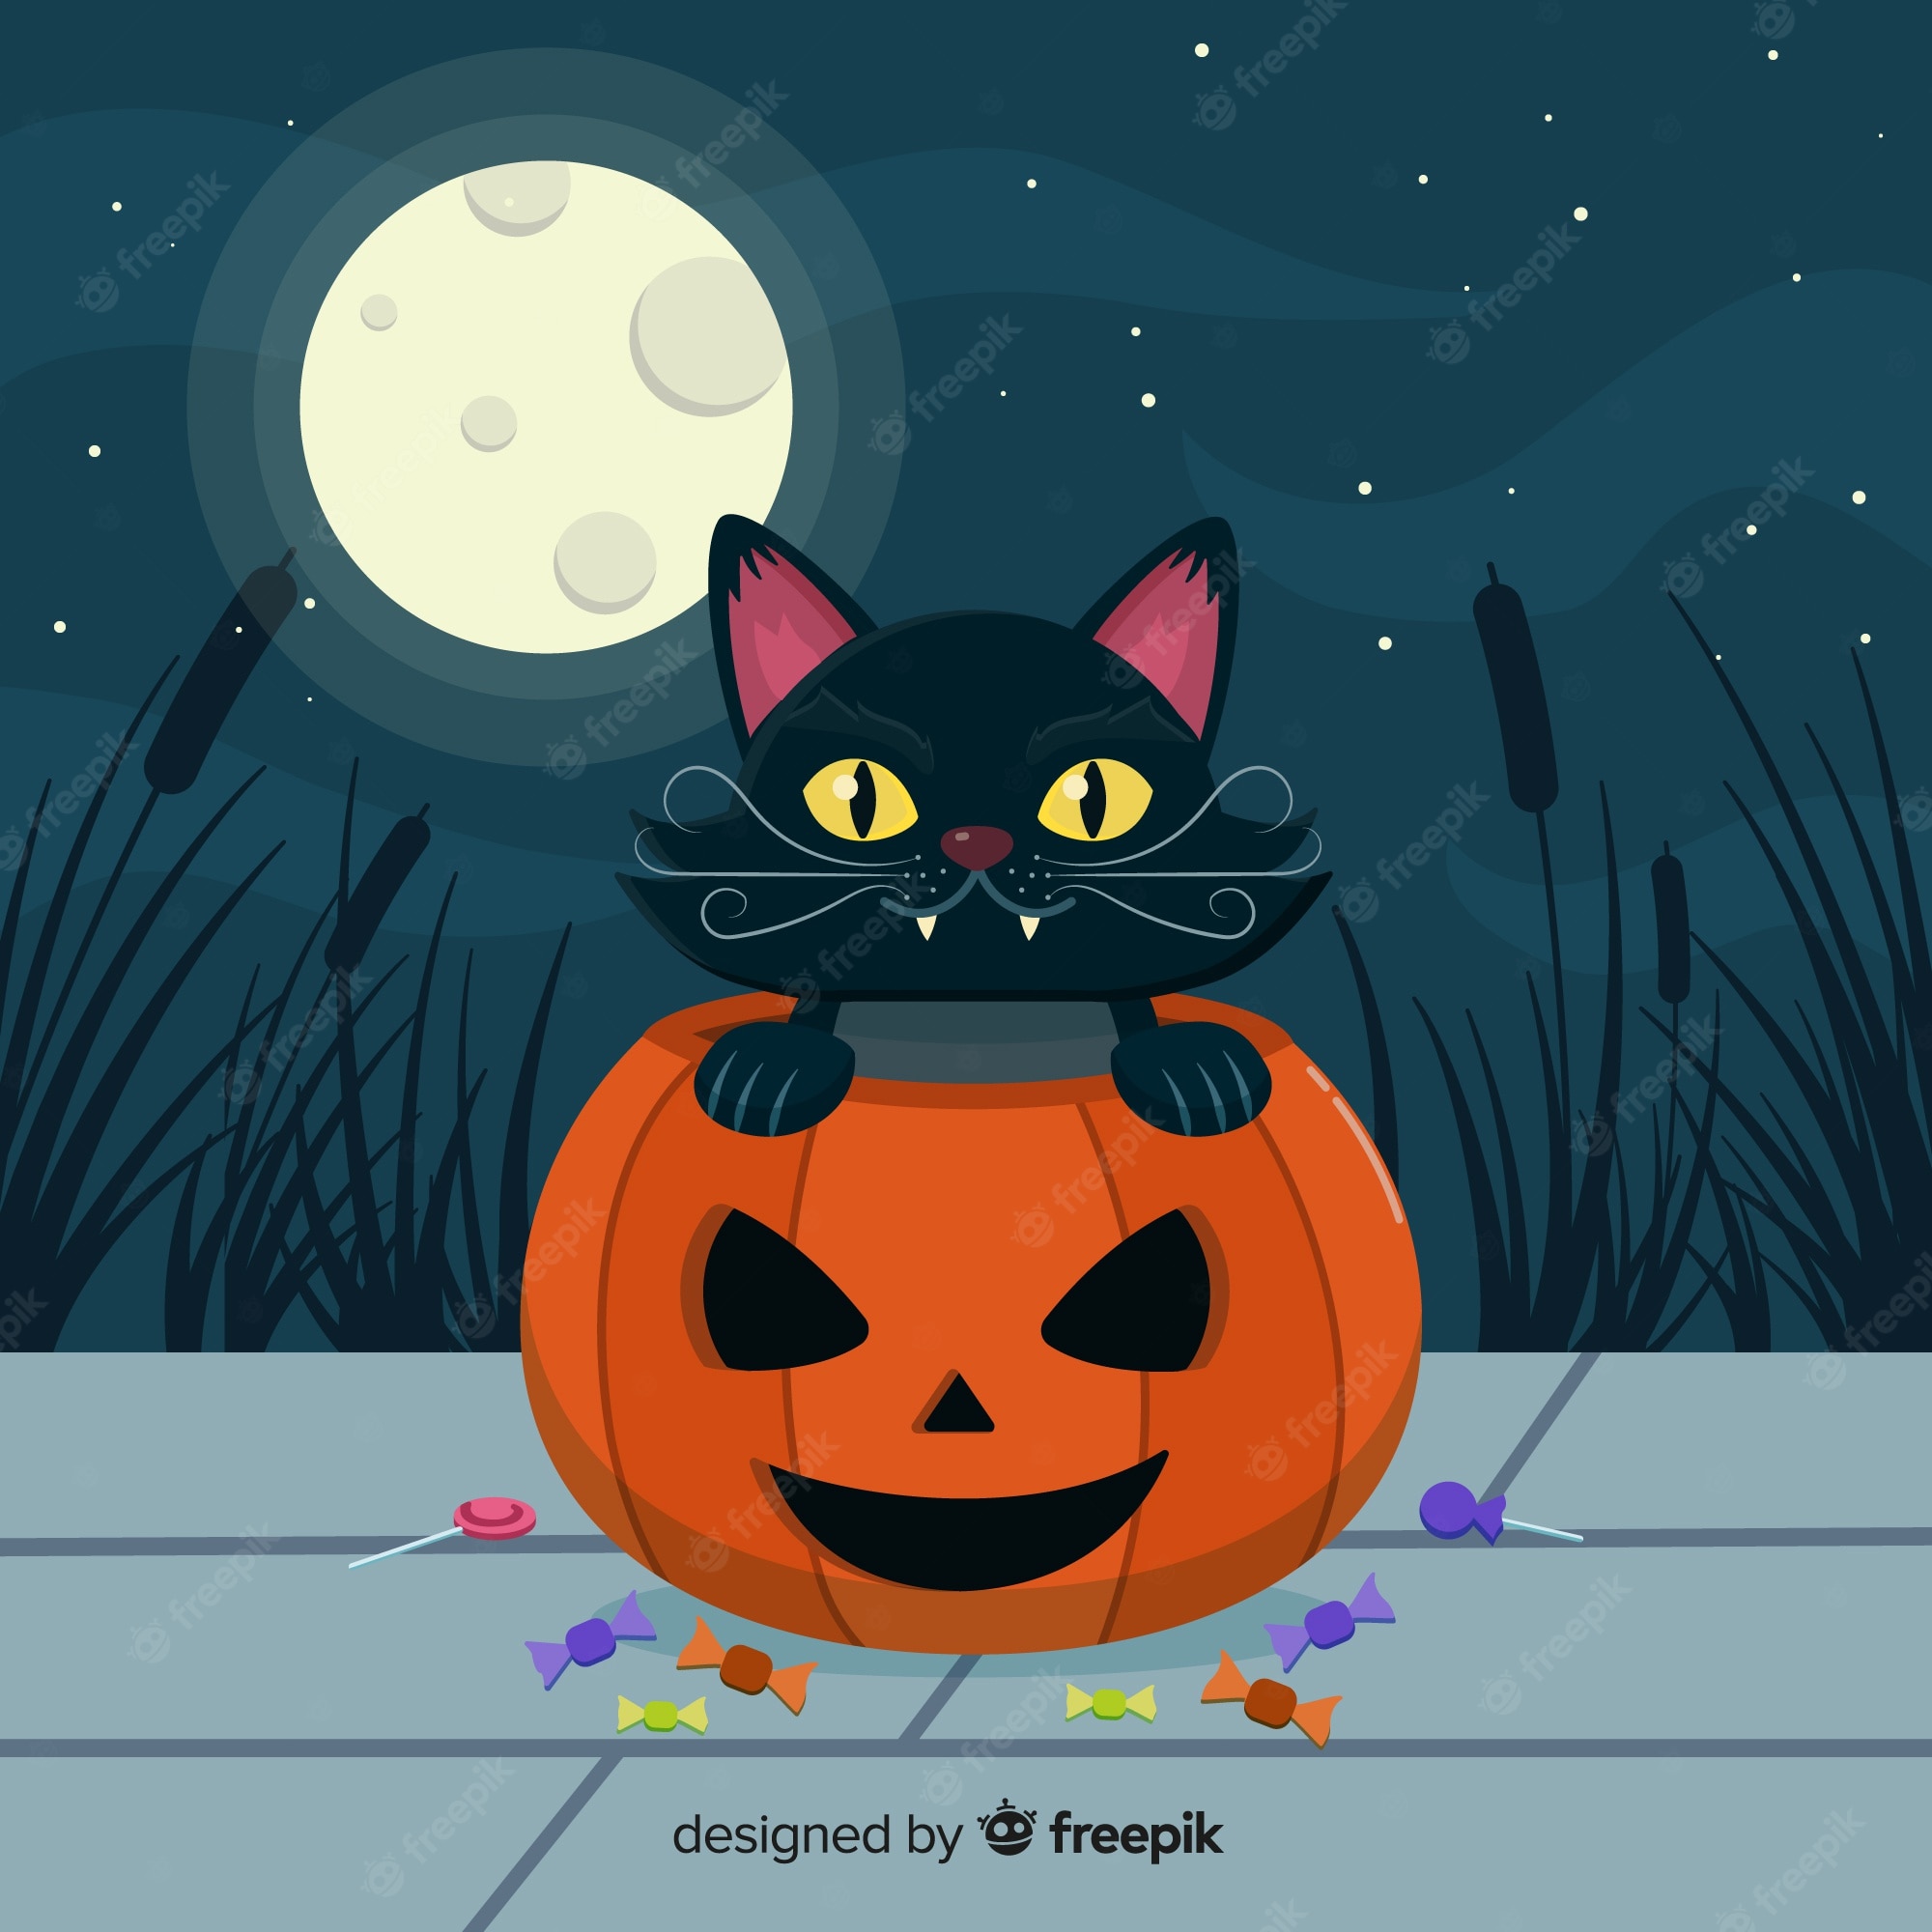 Cute Cartoon Halloween Image. Free Vectors, & PSD